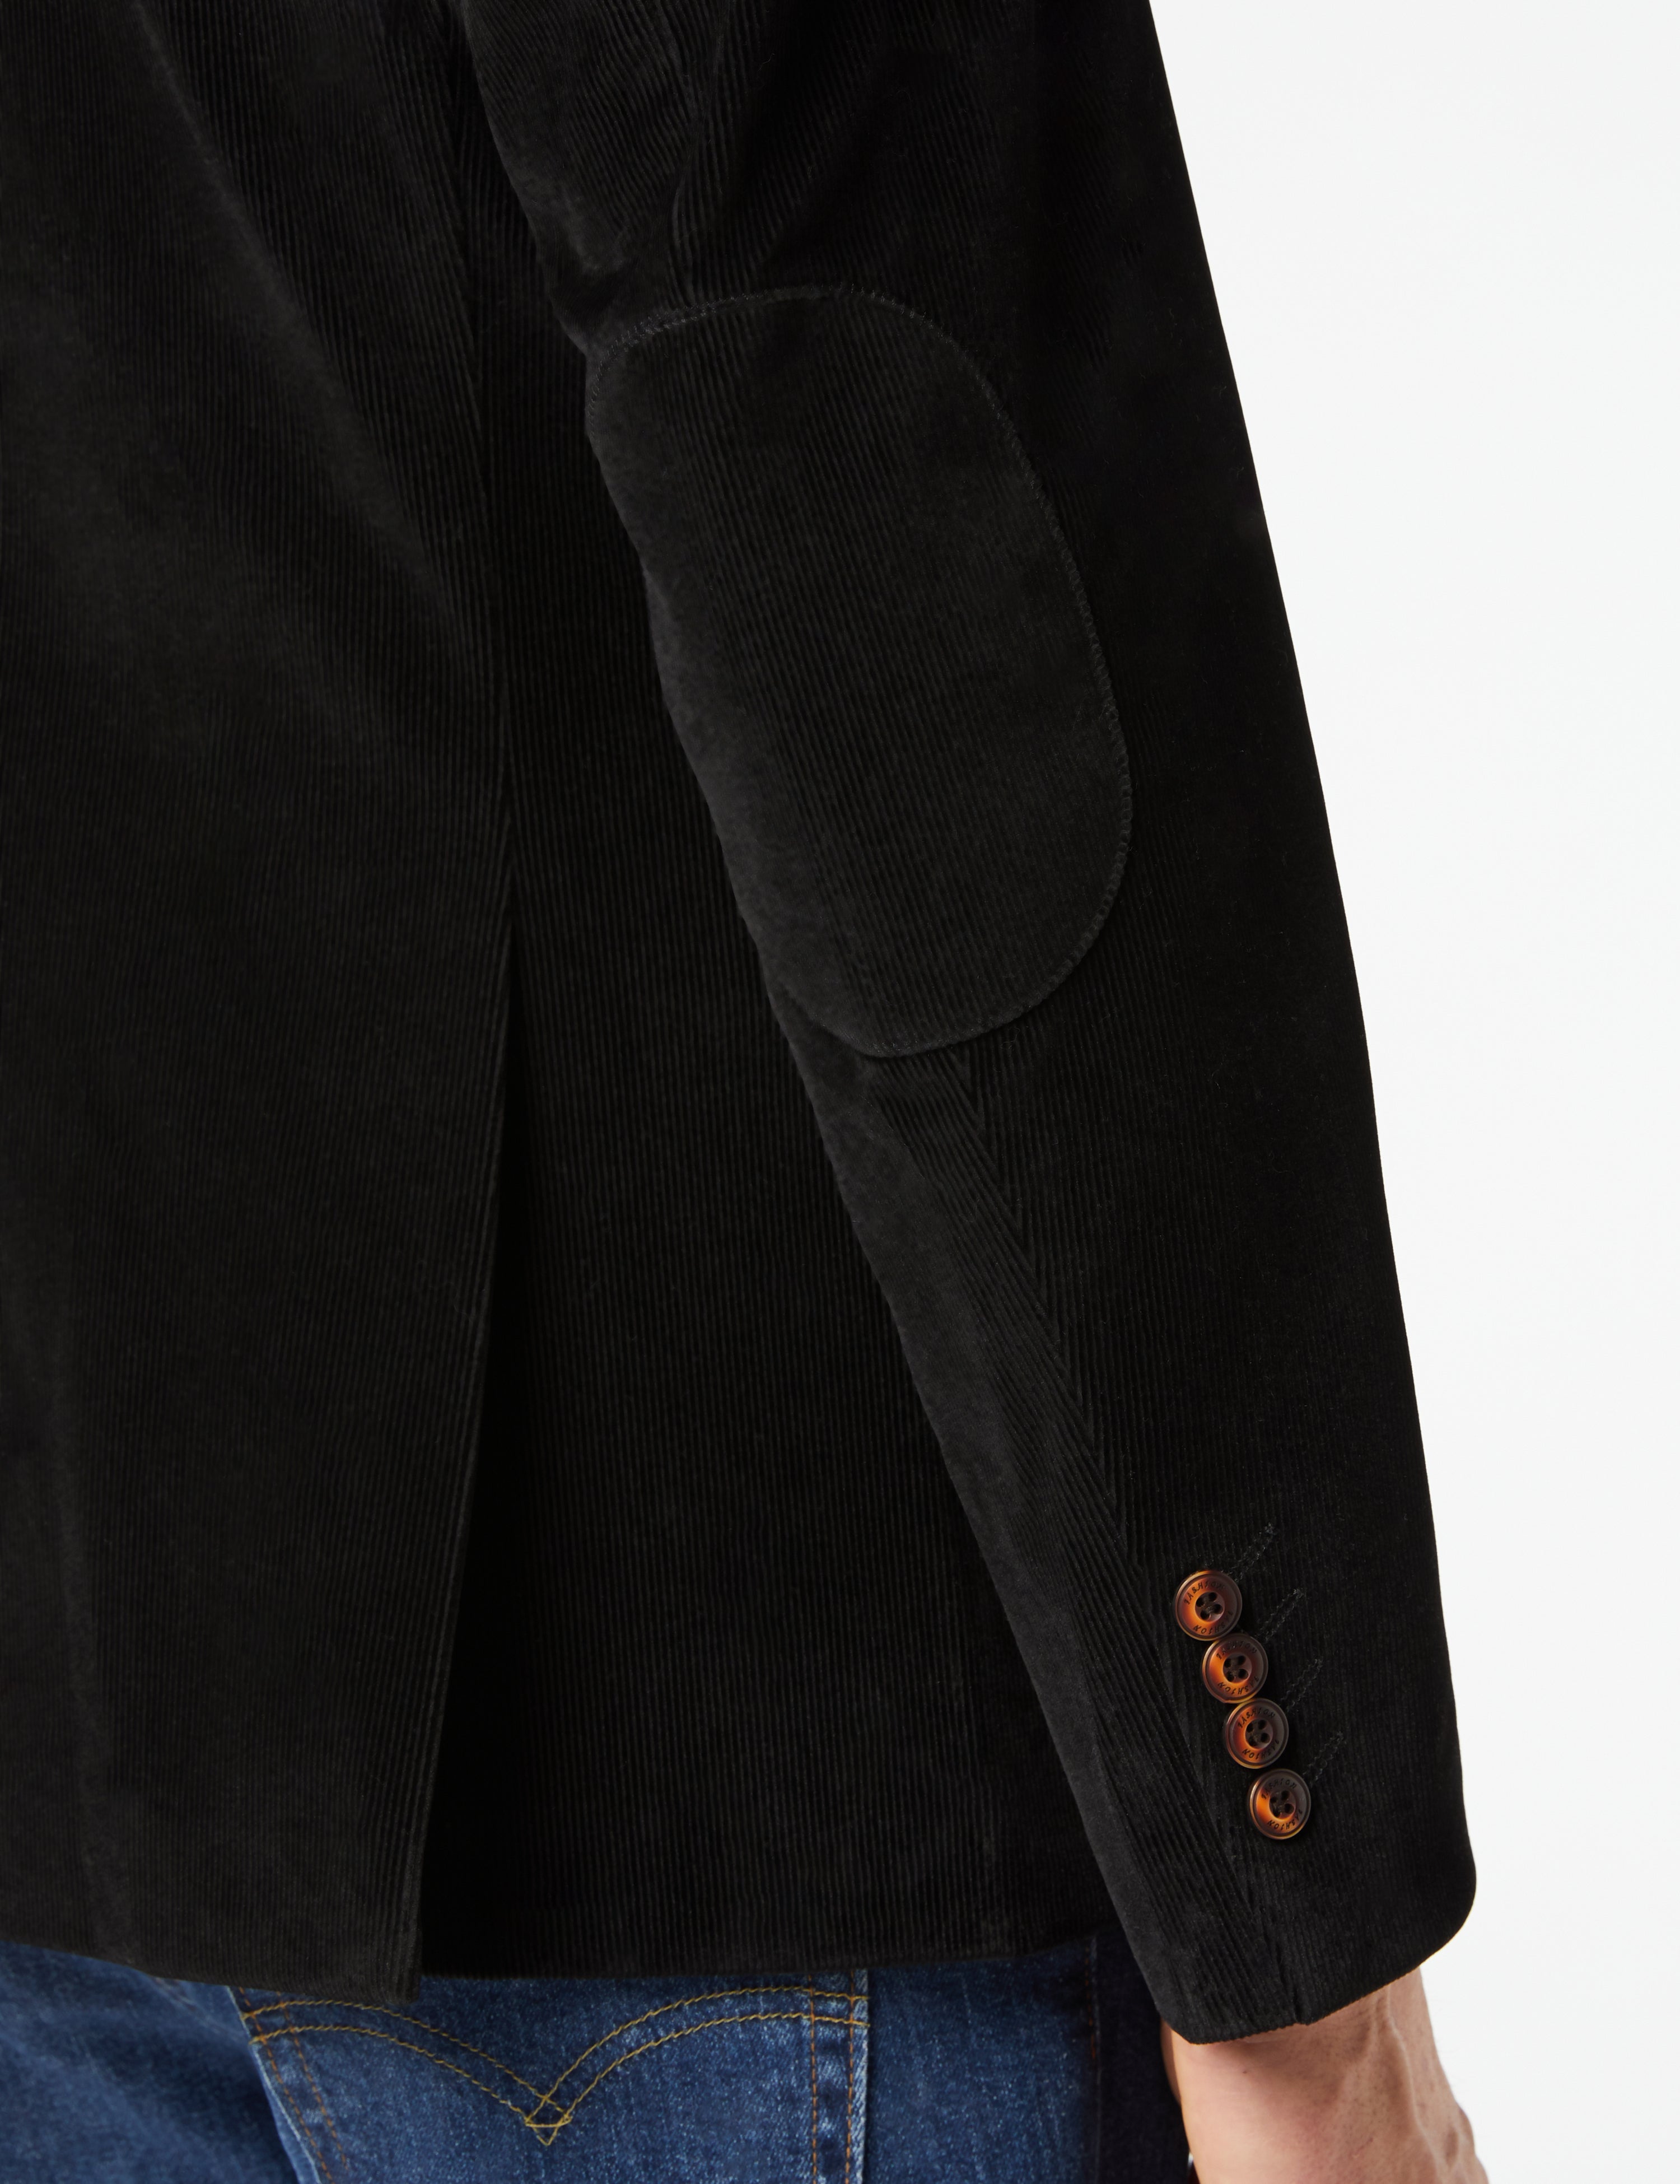 Black Corduroy Blazer Jacket